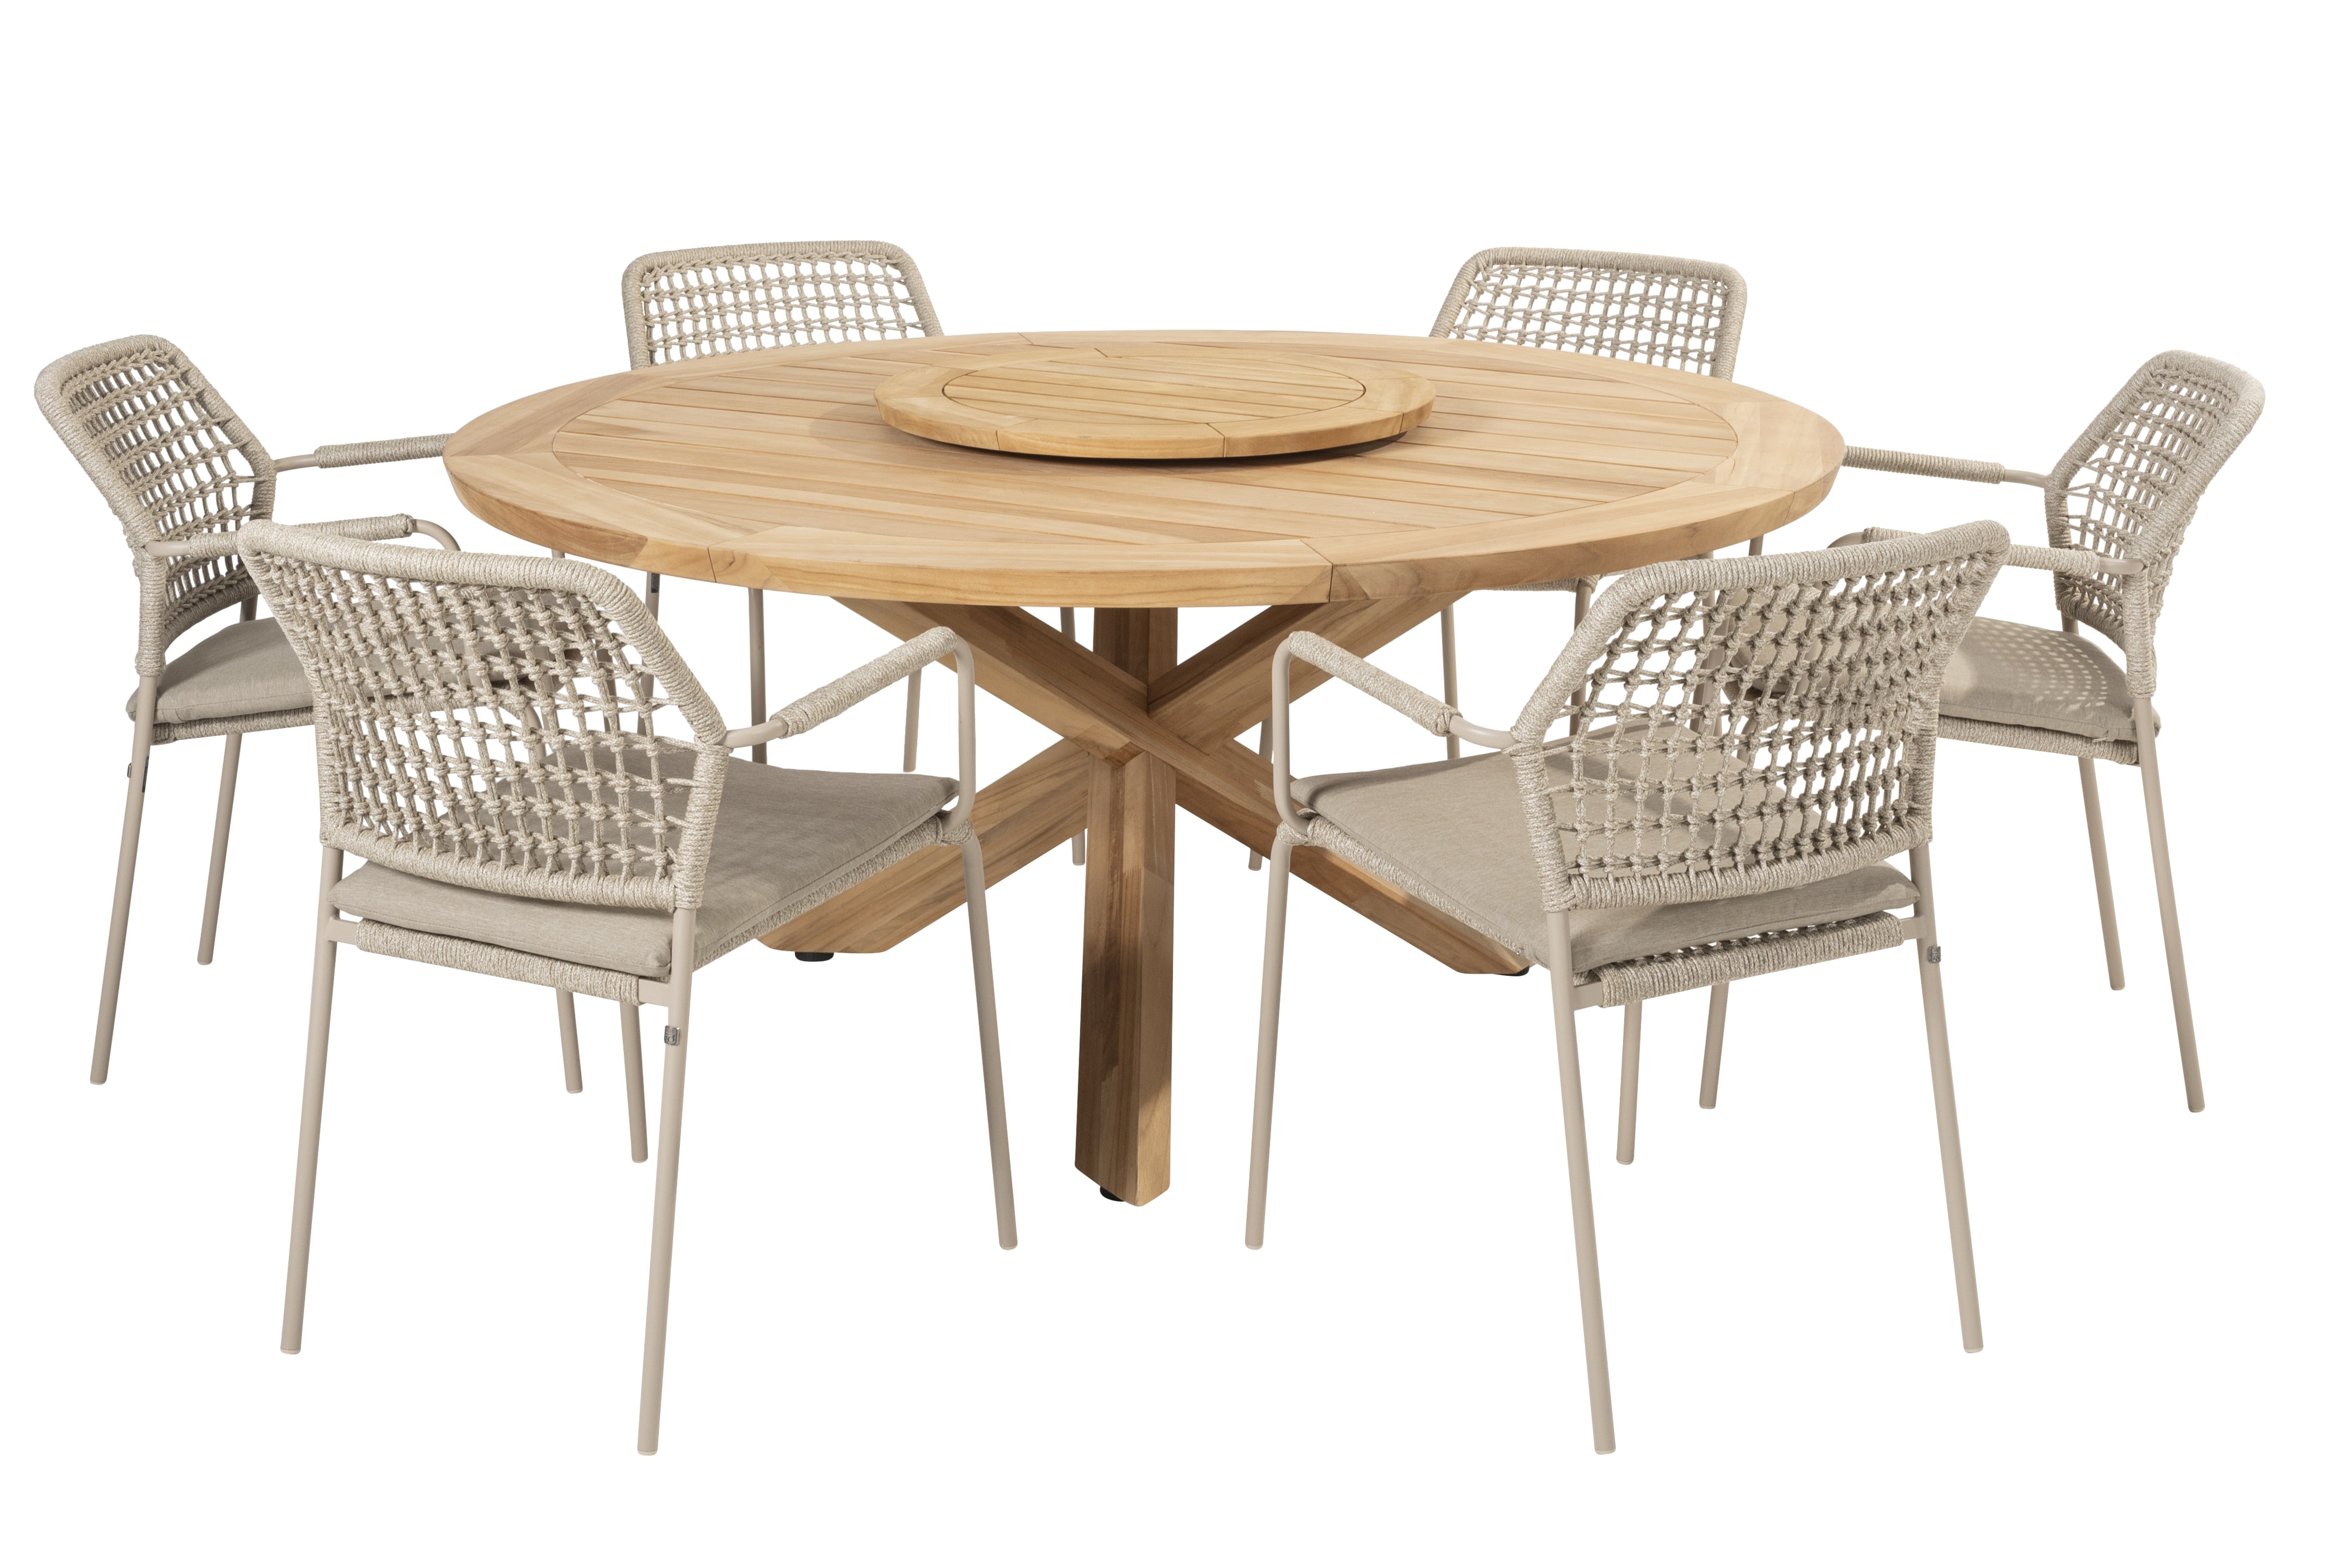 4 Seasons Outdoor Barista Dining With Prado 160cm Round Table Set